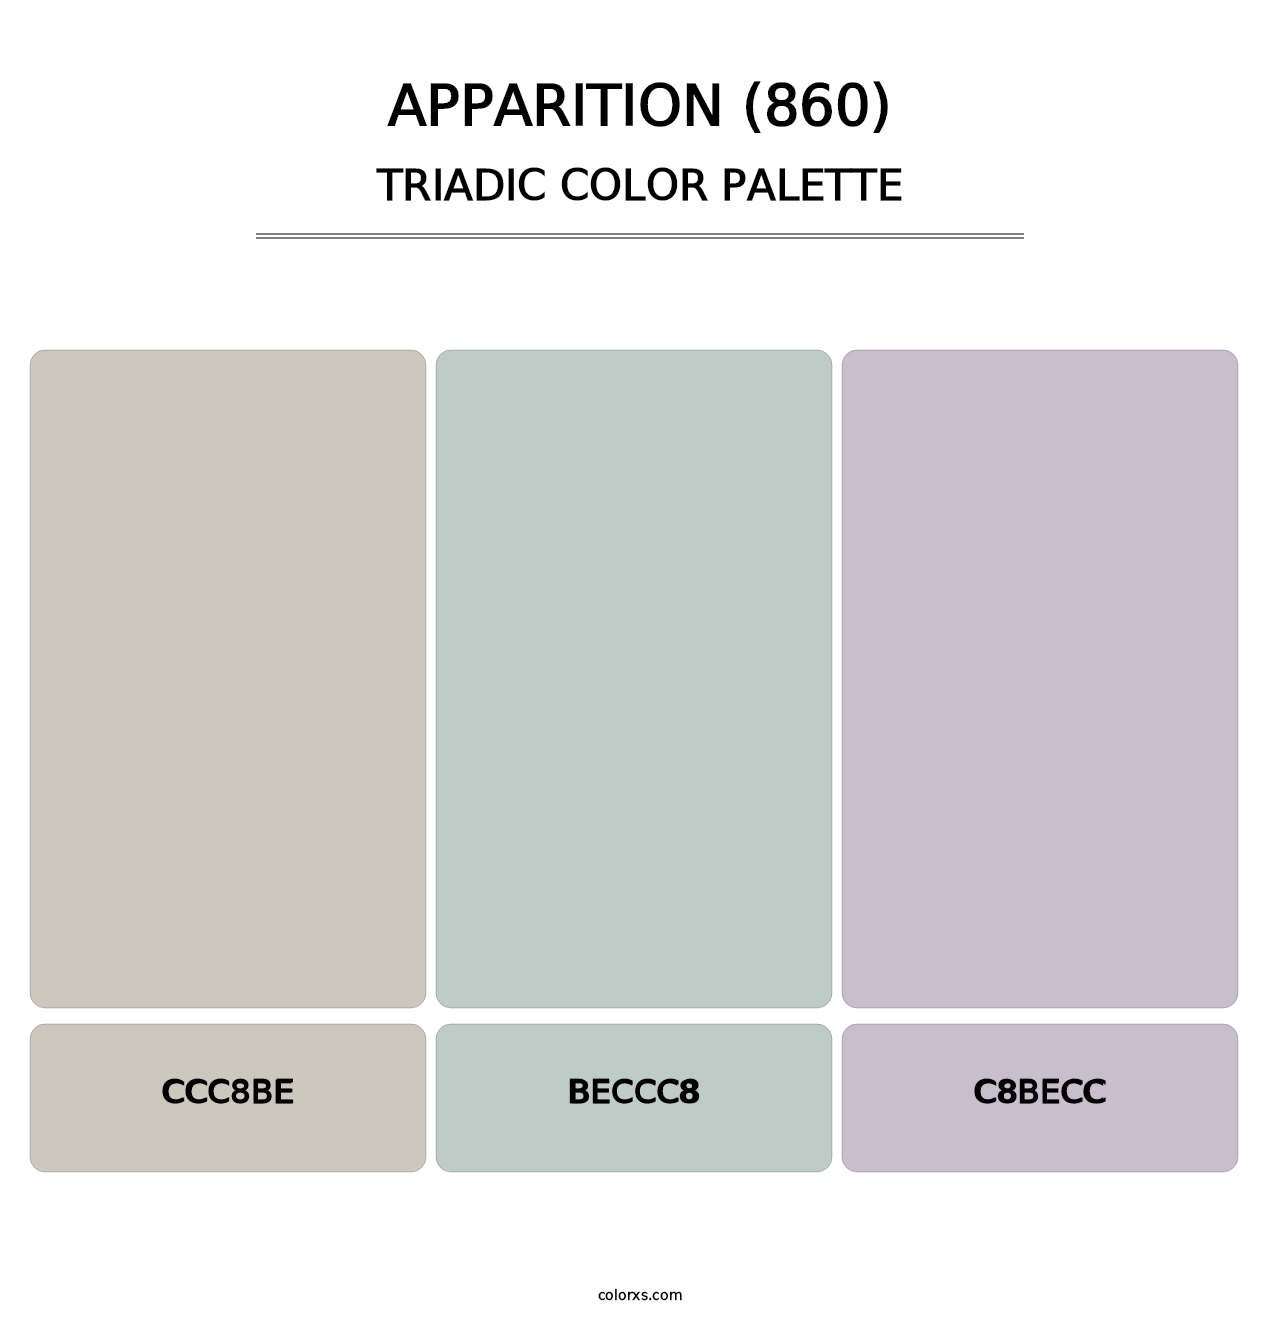 Apparition (860) - Triadic Color Palette